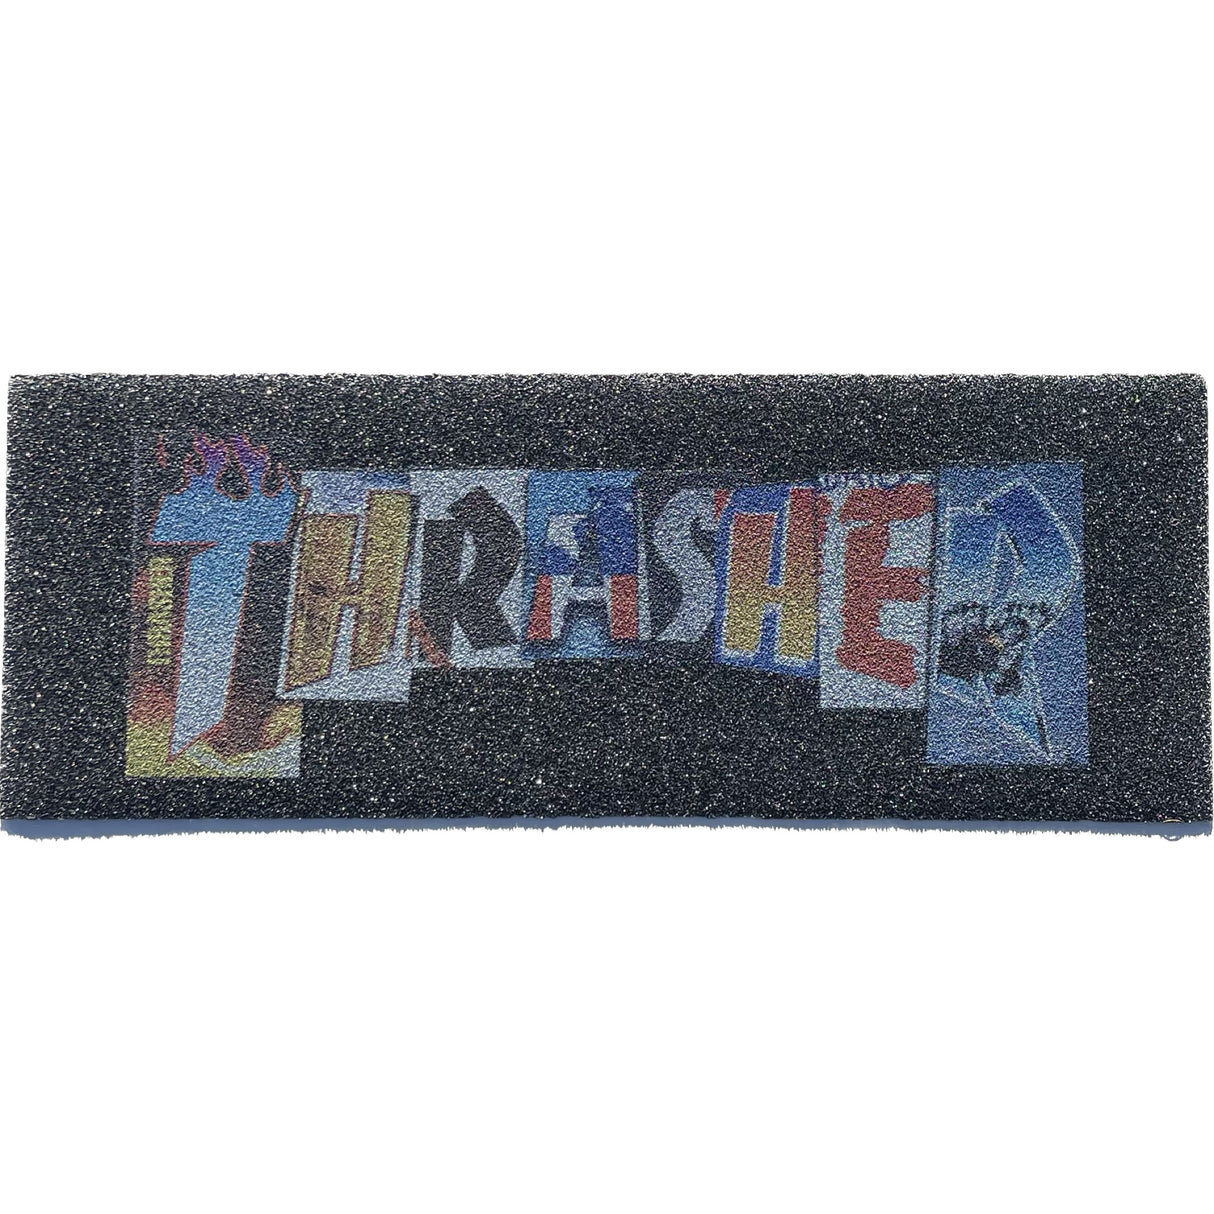 Thrasher 40 Year Grip Strip 9" x 3.25" Griptape